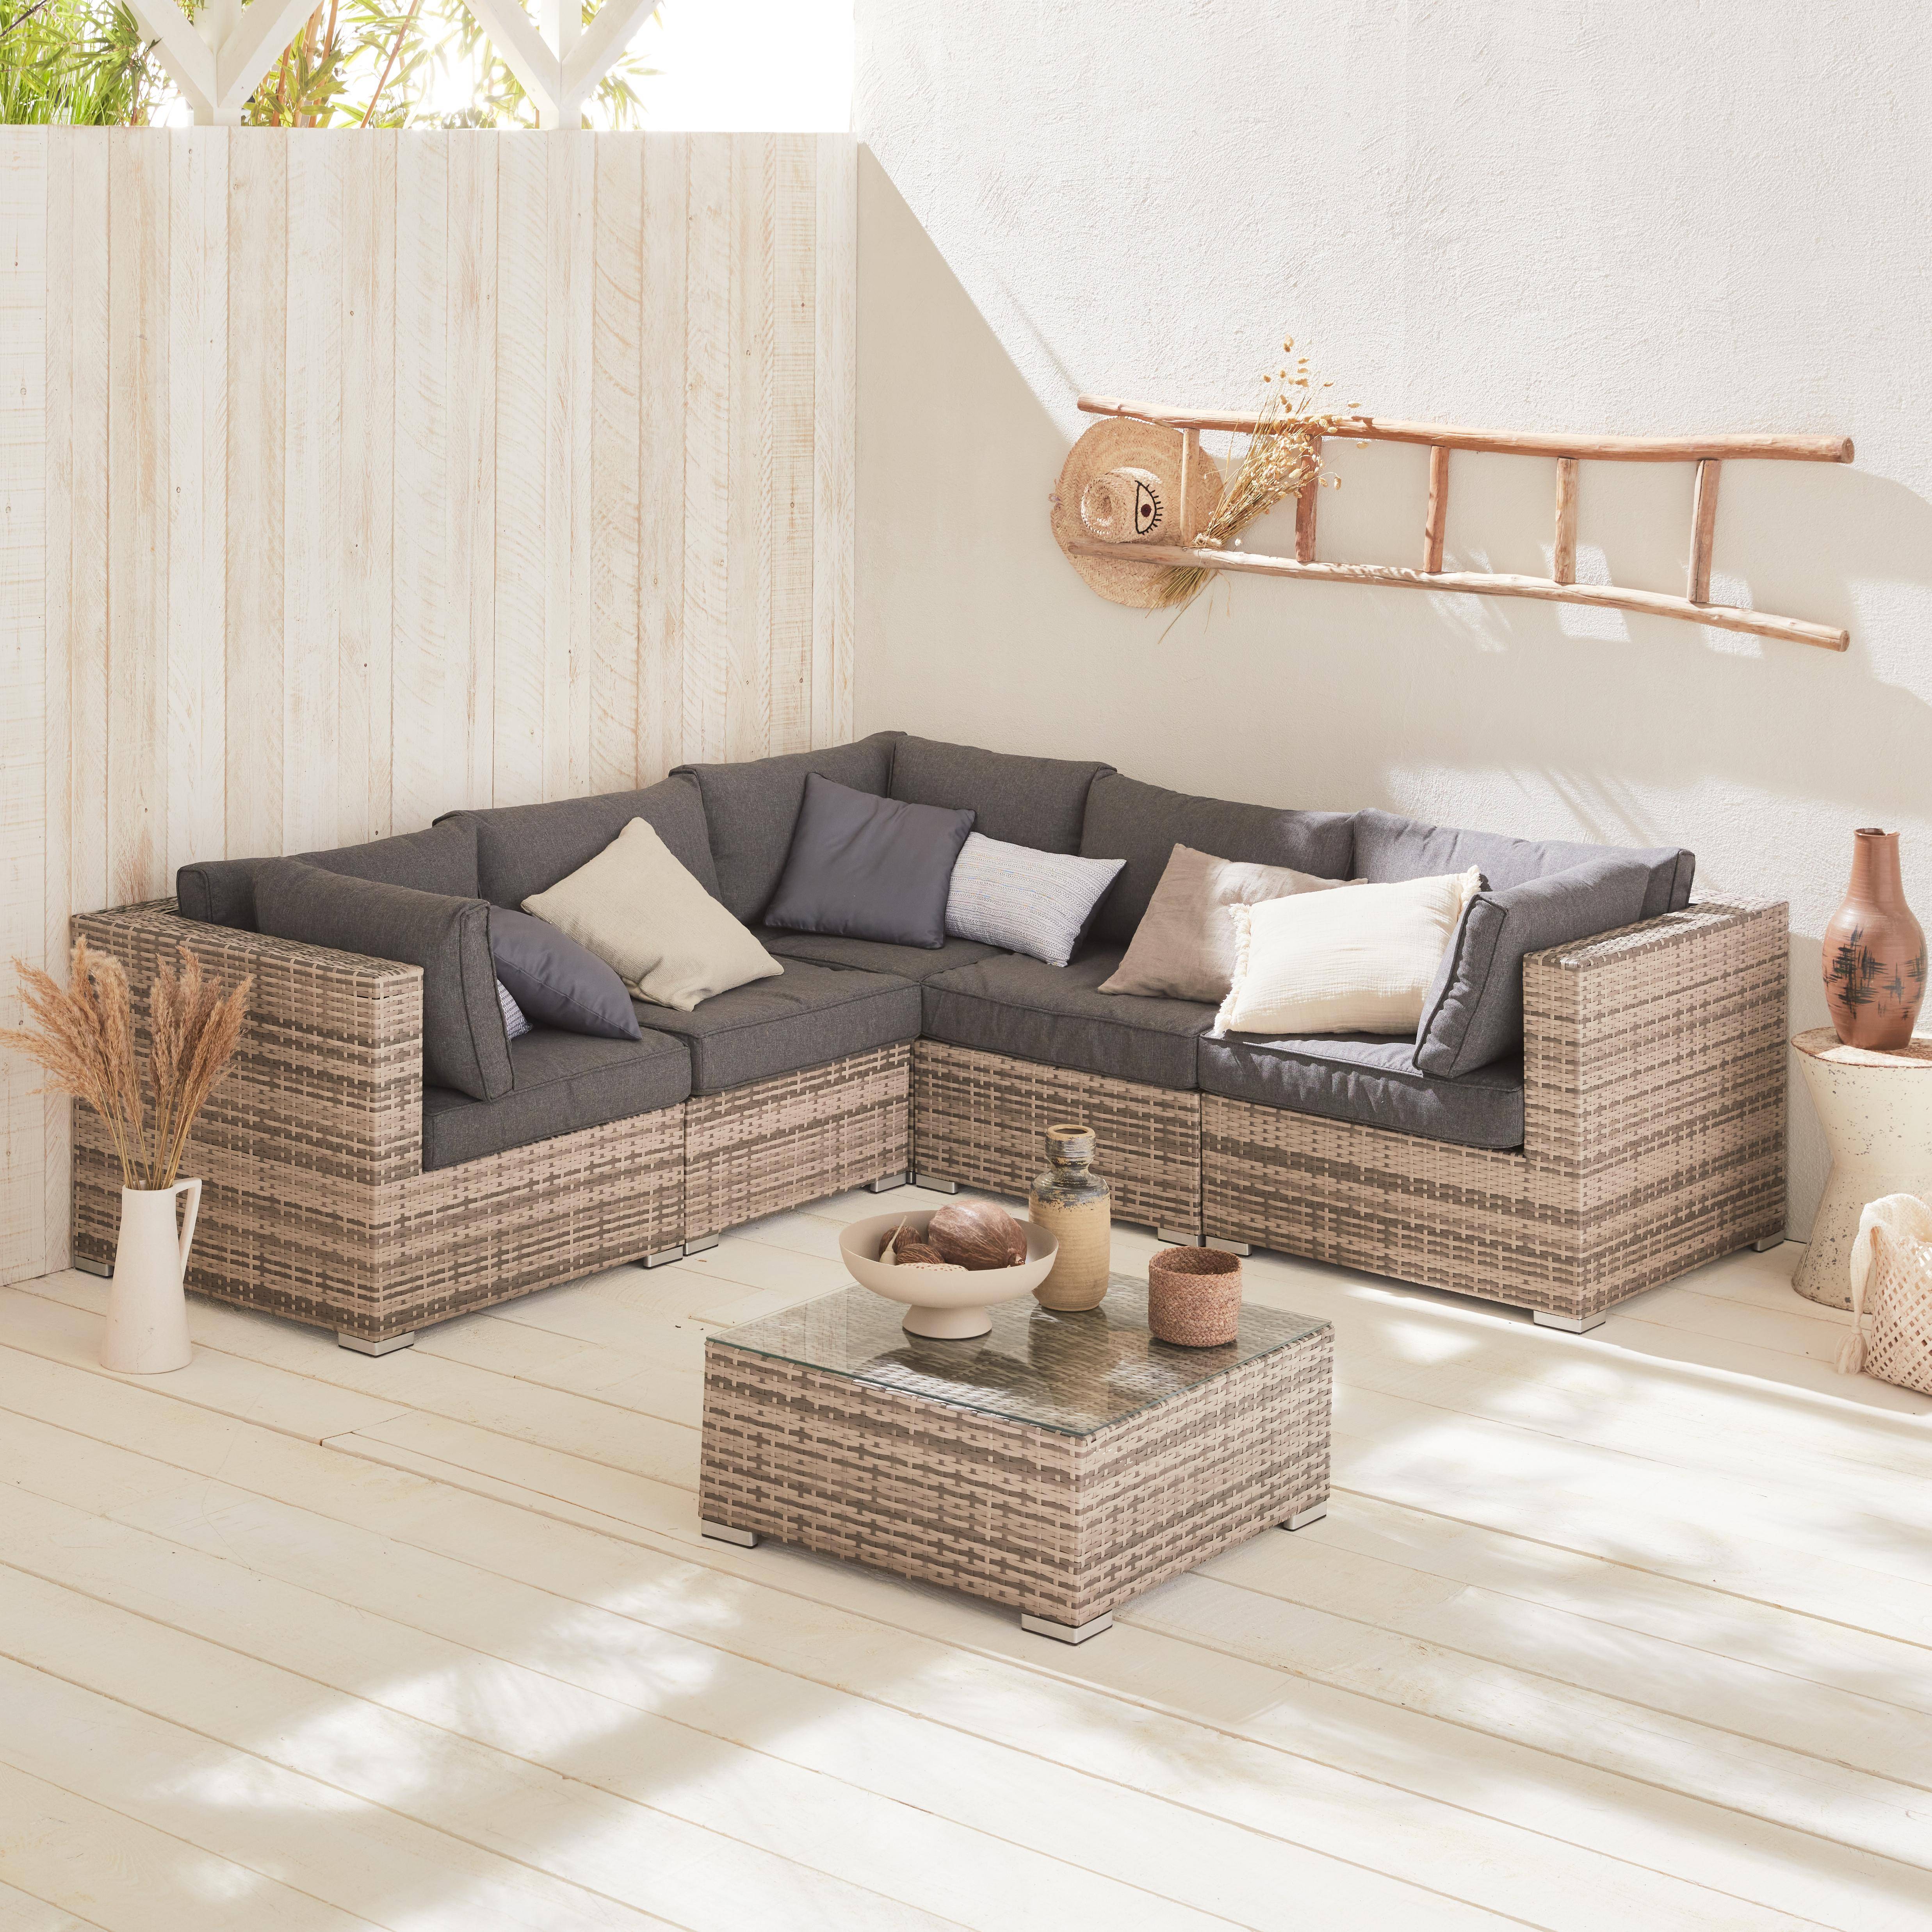 Ready assembled 5-seater polyrattan corner garden sofa set - sofa, coffee table - Napoli - Mixed Grey rattan, Grey cushions,sweeek,Photo1